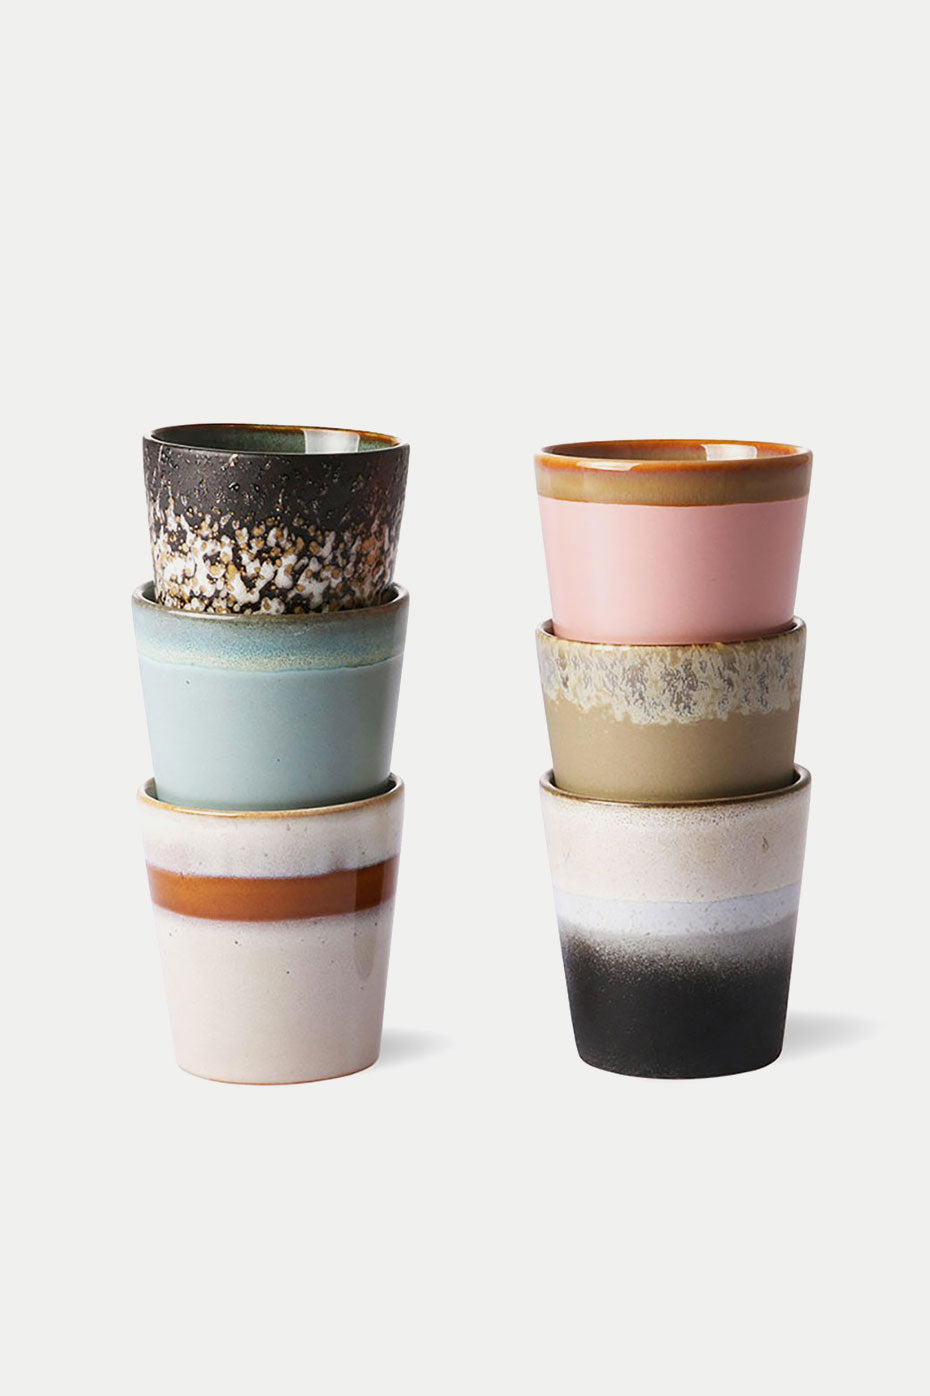 70's Ceramics Mugs Set of 6